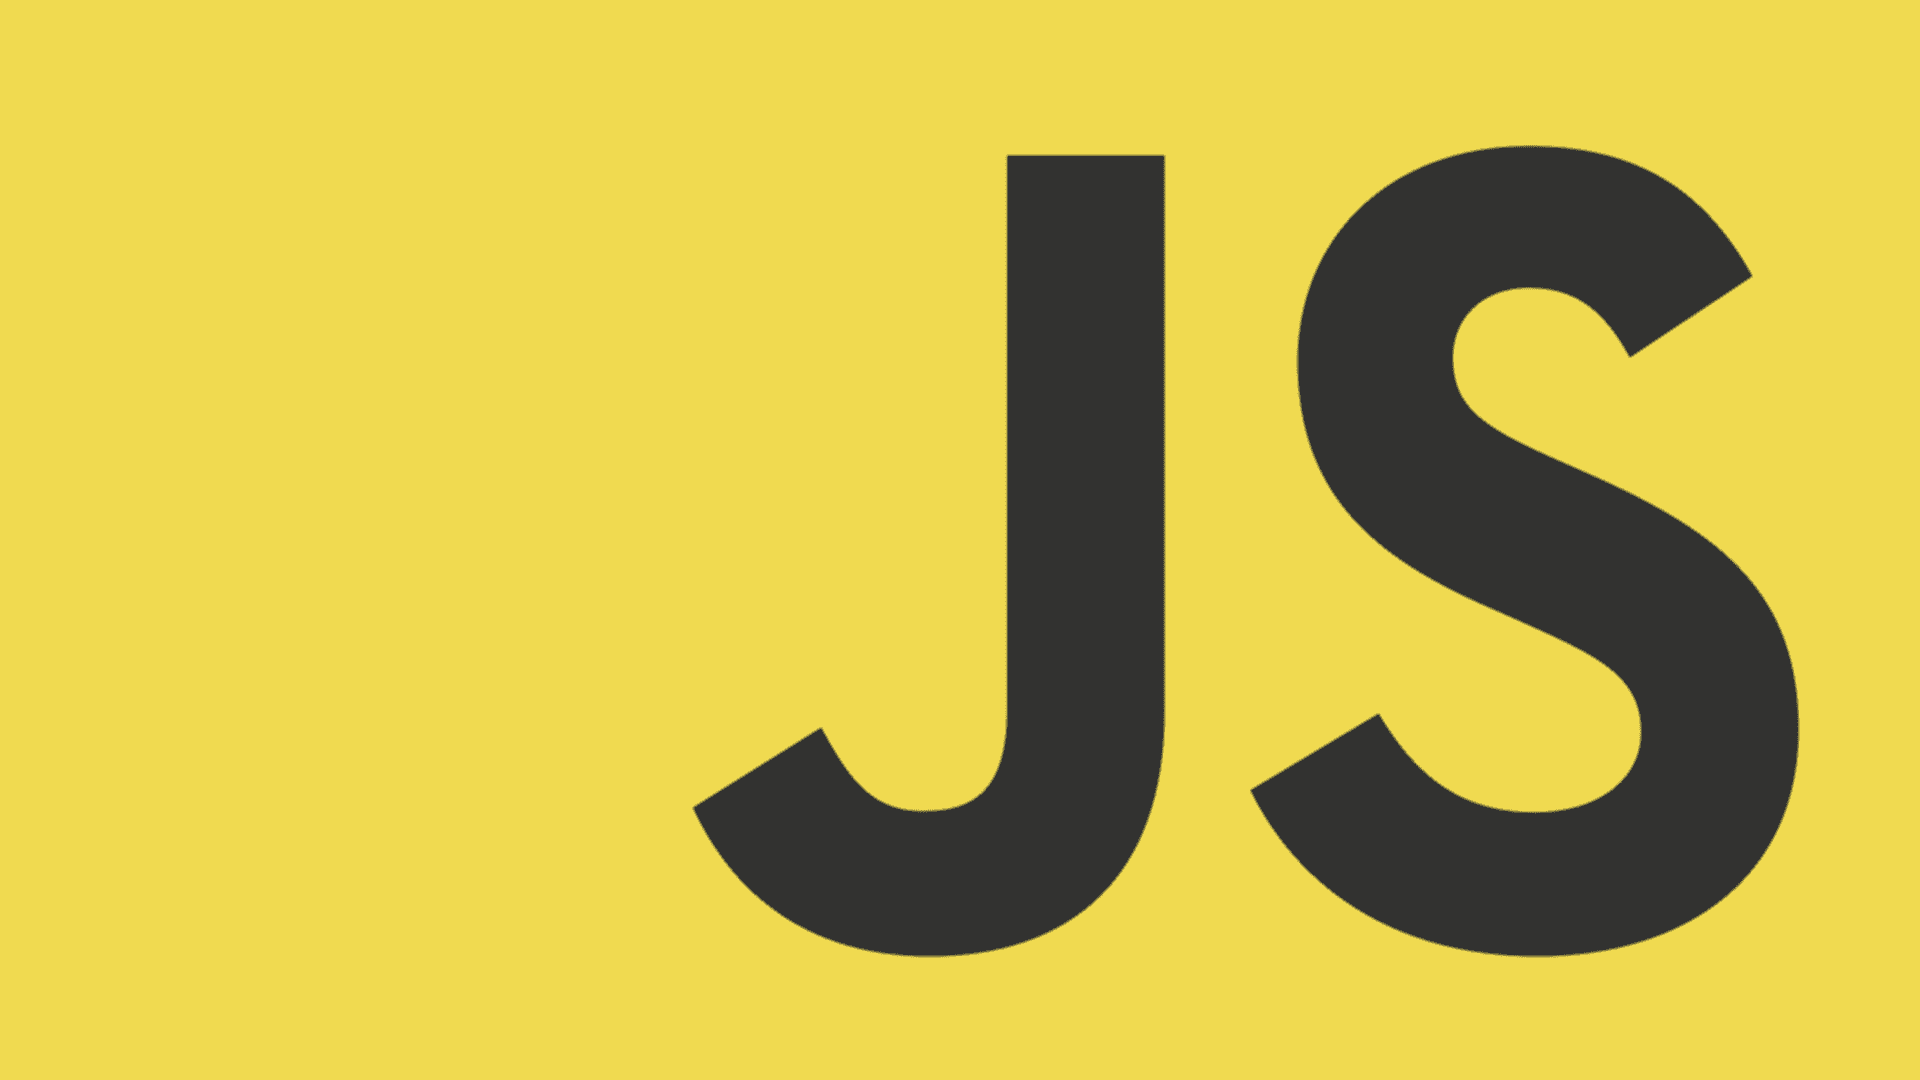 Using Set in JavaScript